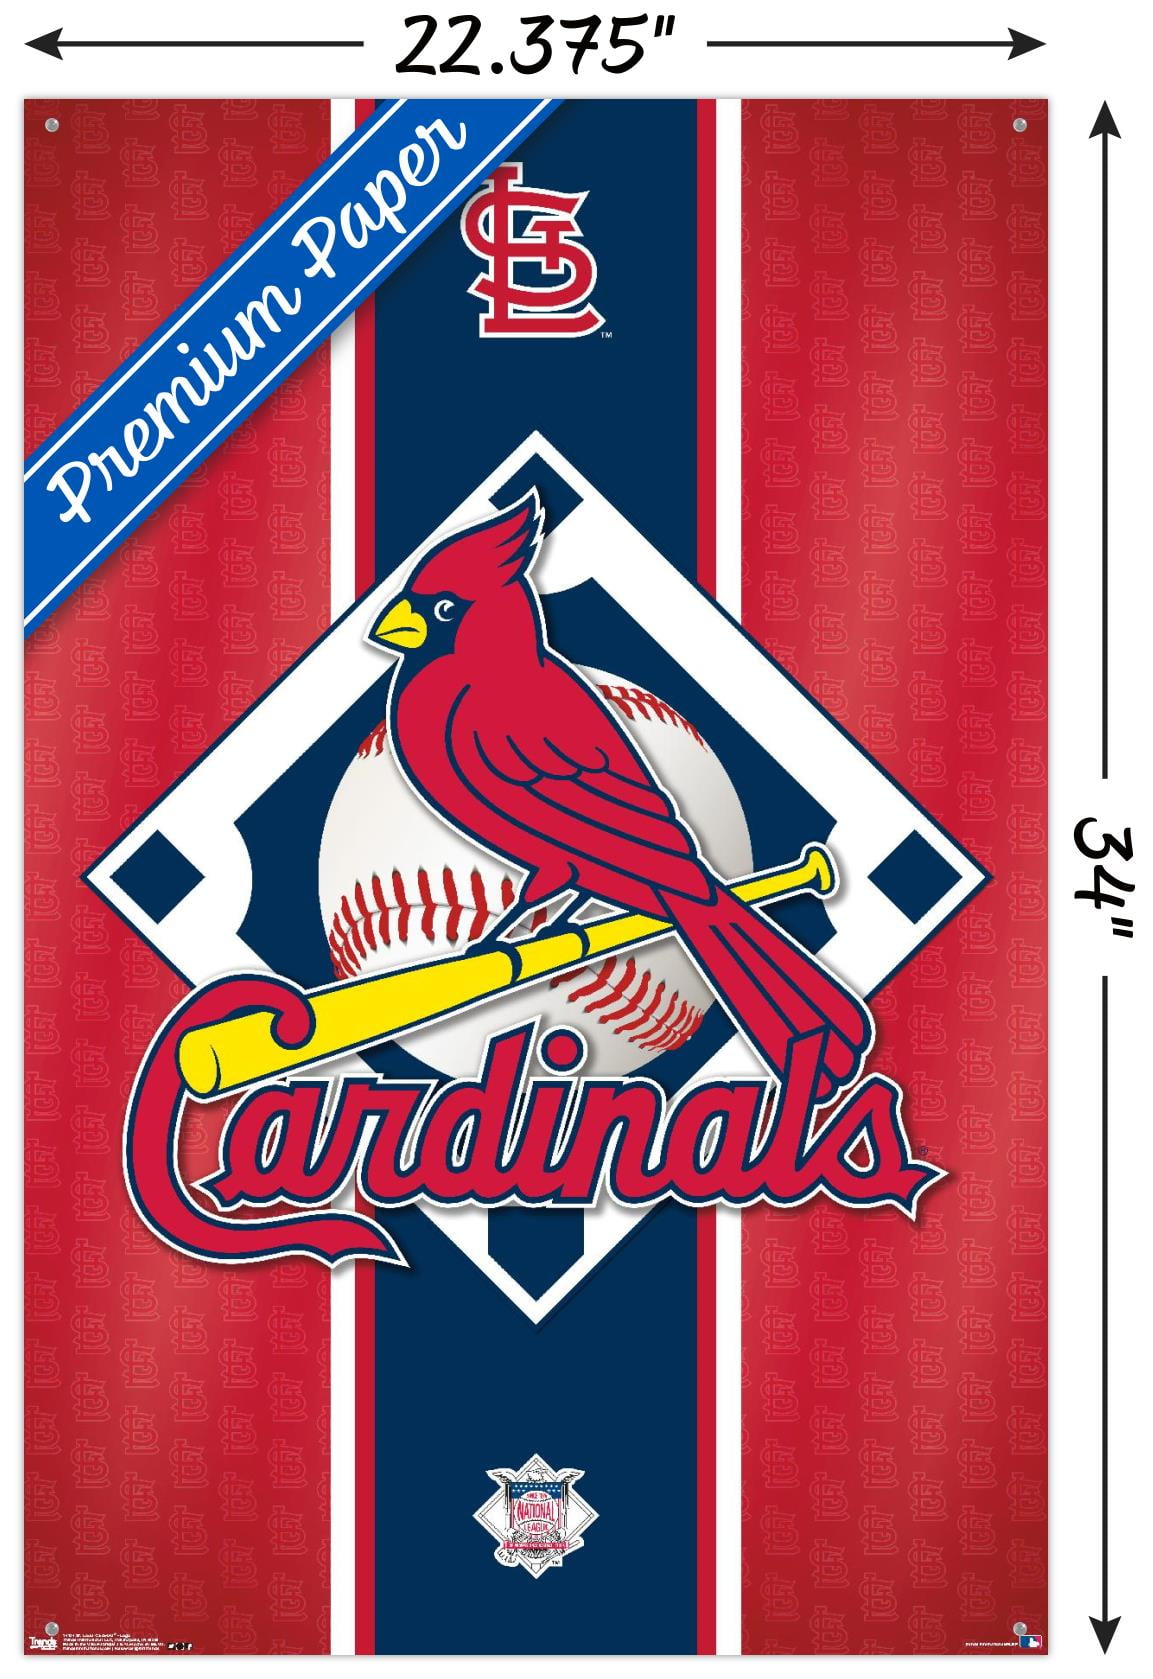 St Louis Cardinals Logo Poster 2 Baseball – 5 Panel Canvas Art